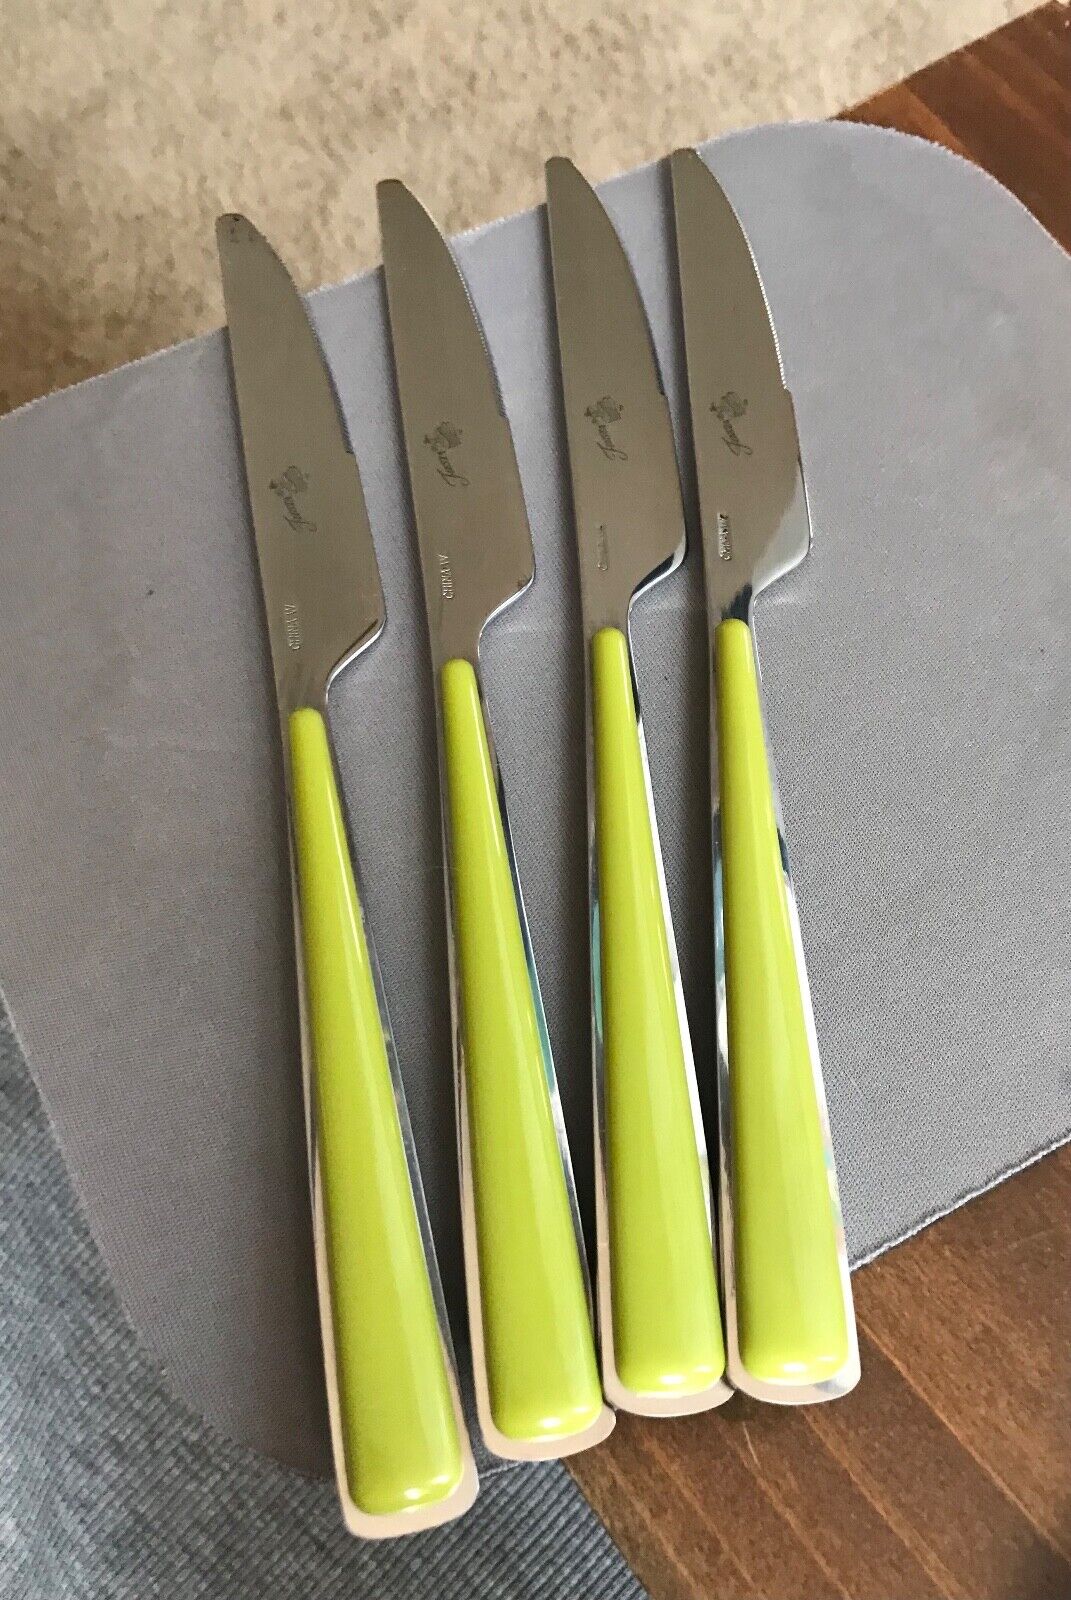 Fiesta ware knives